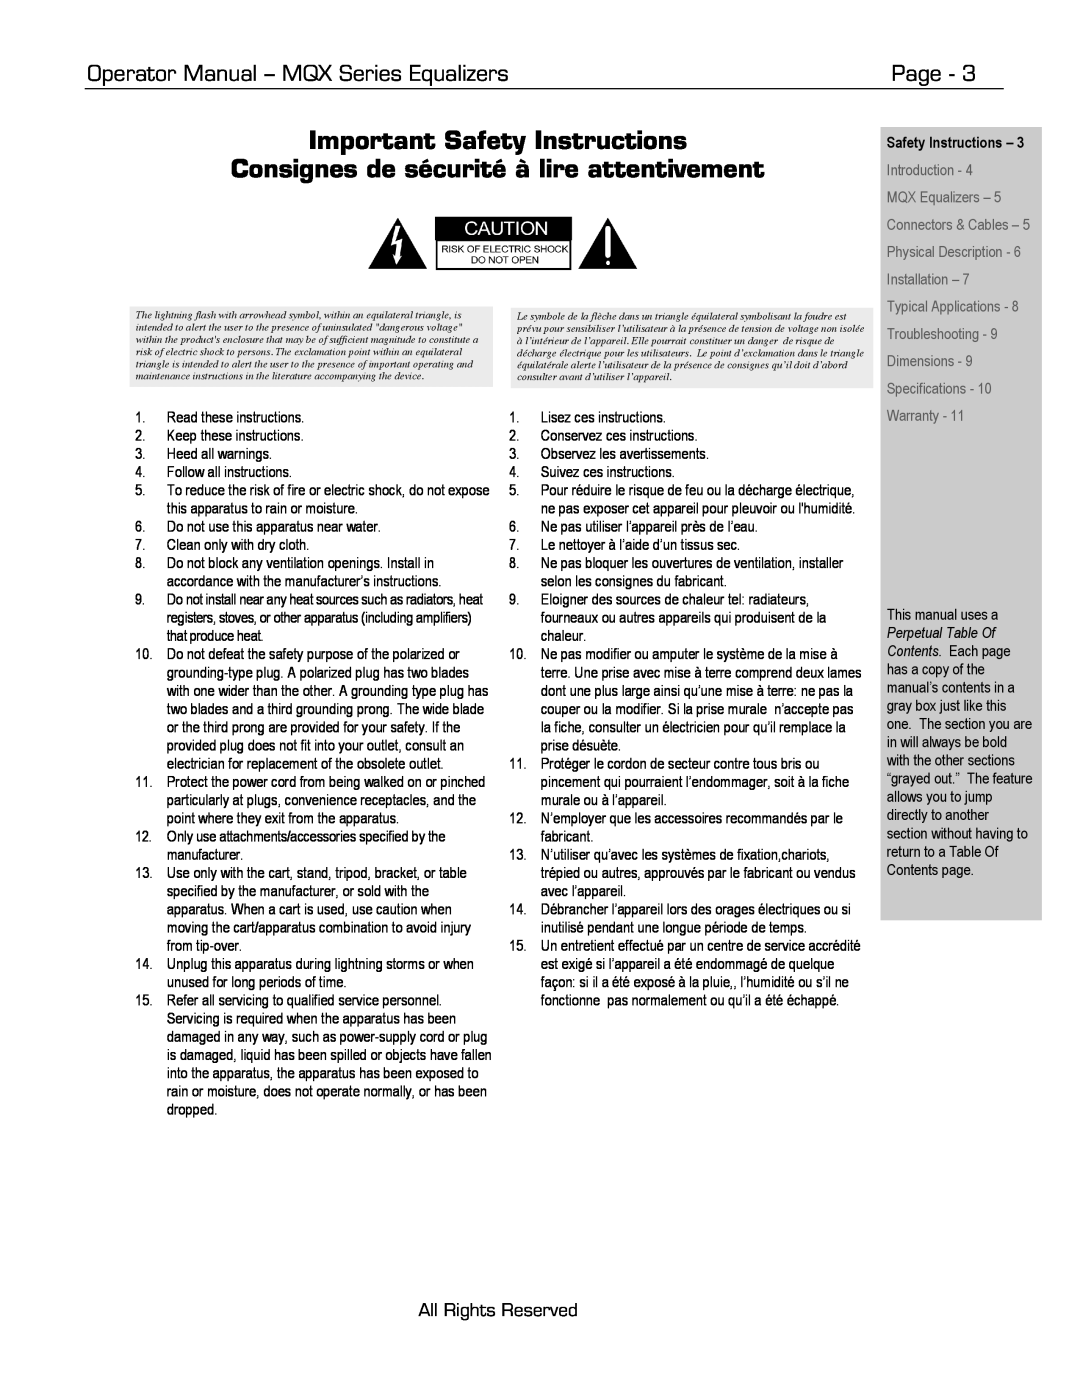 Ashly MQX-2150 manual Important Safety Instructions, Consignes de sécurité à lire attentivement, Page, All Rights Reserved 